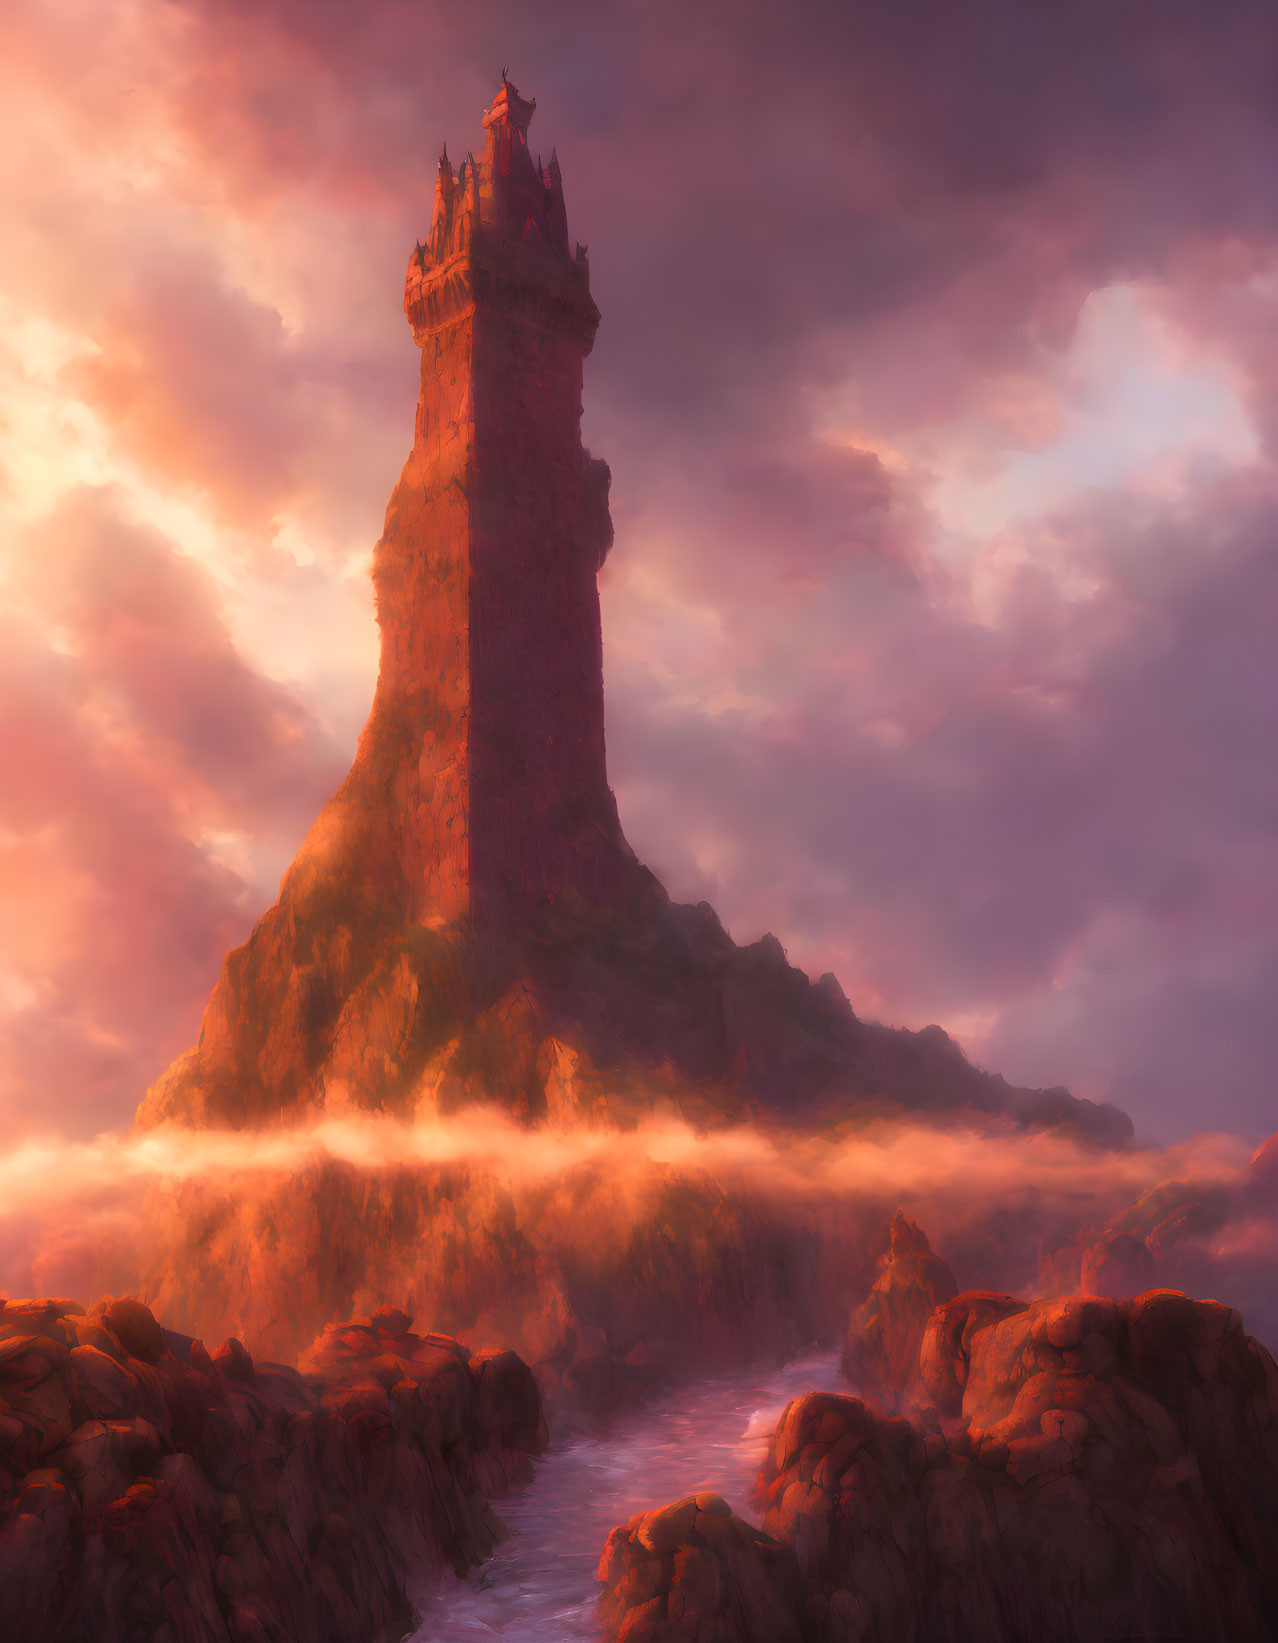 Tower on Craggy Peak under Pink Sunset Sky